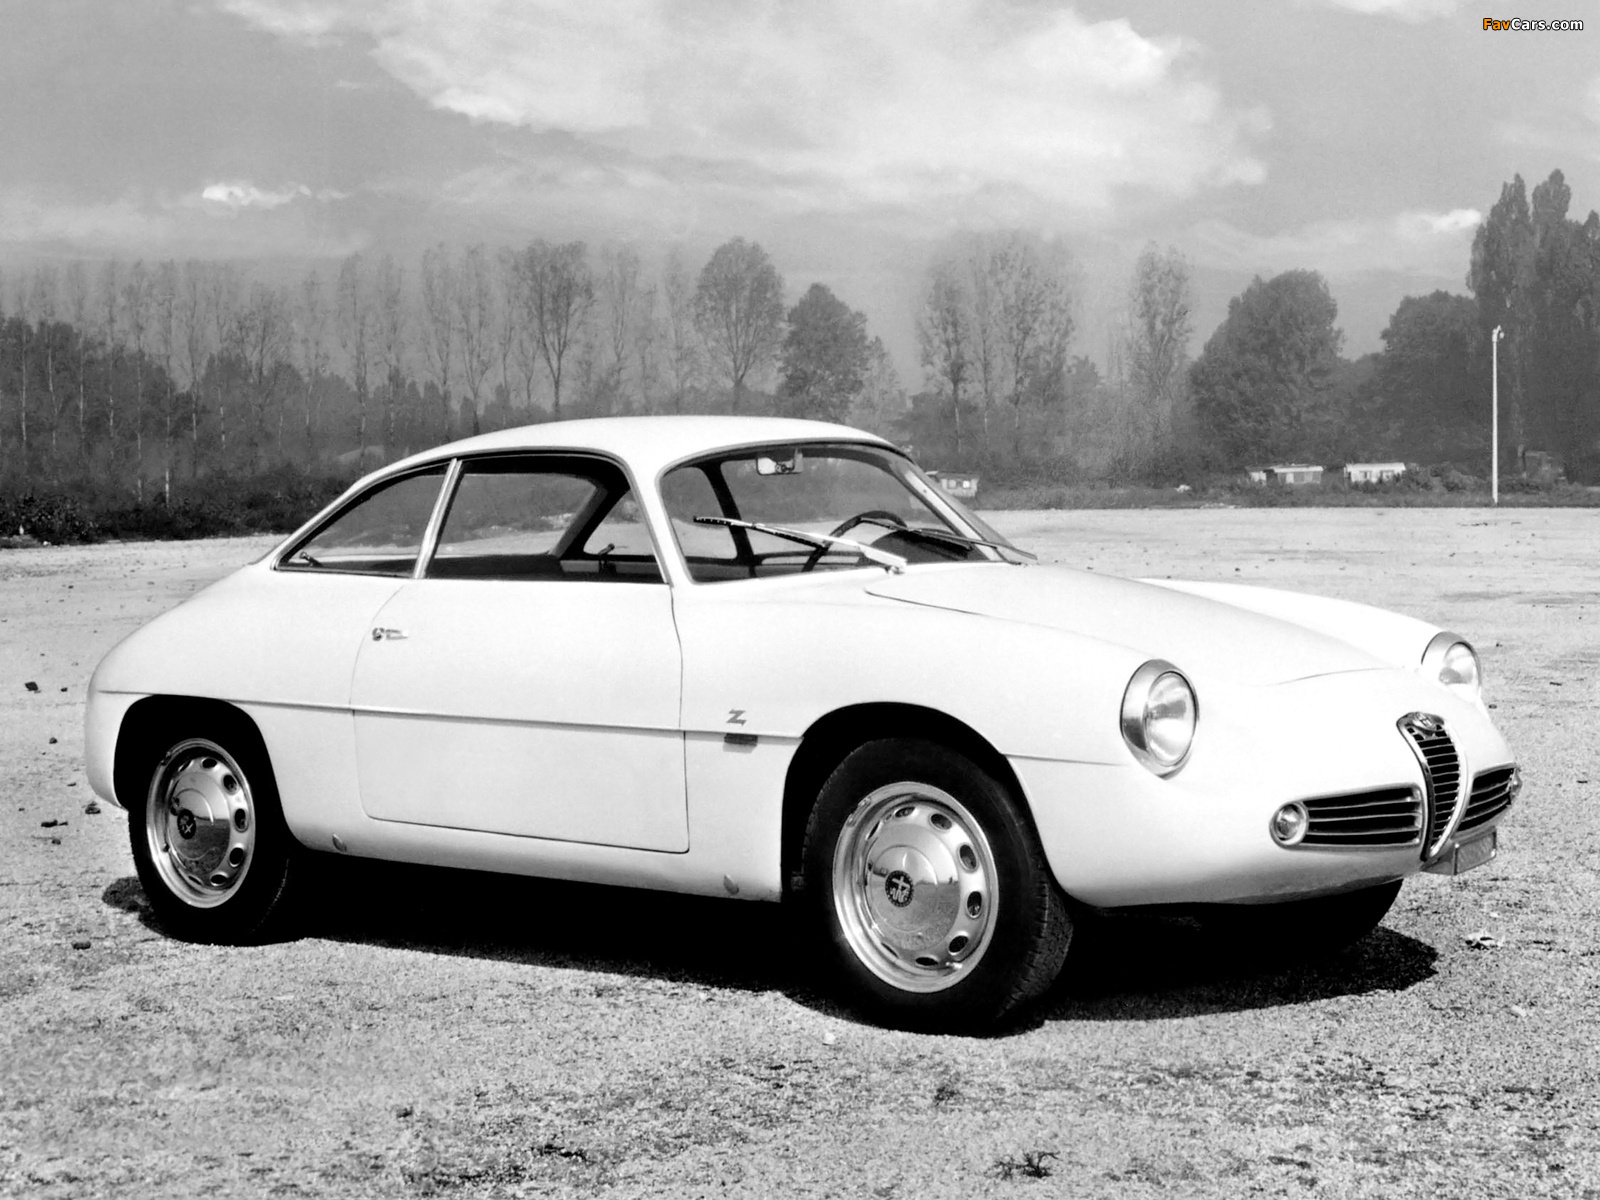 Alfa Romeo Giulietta Sz Wallpapers